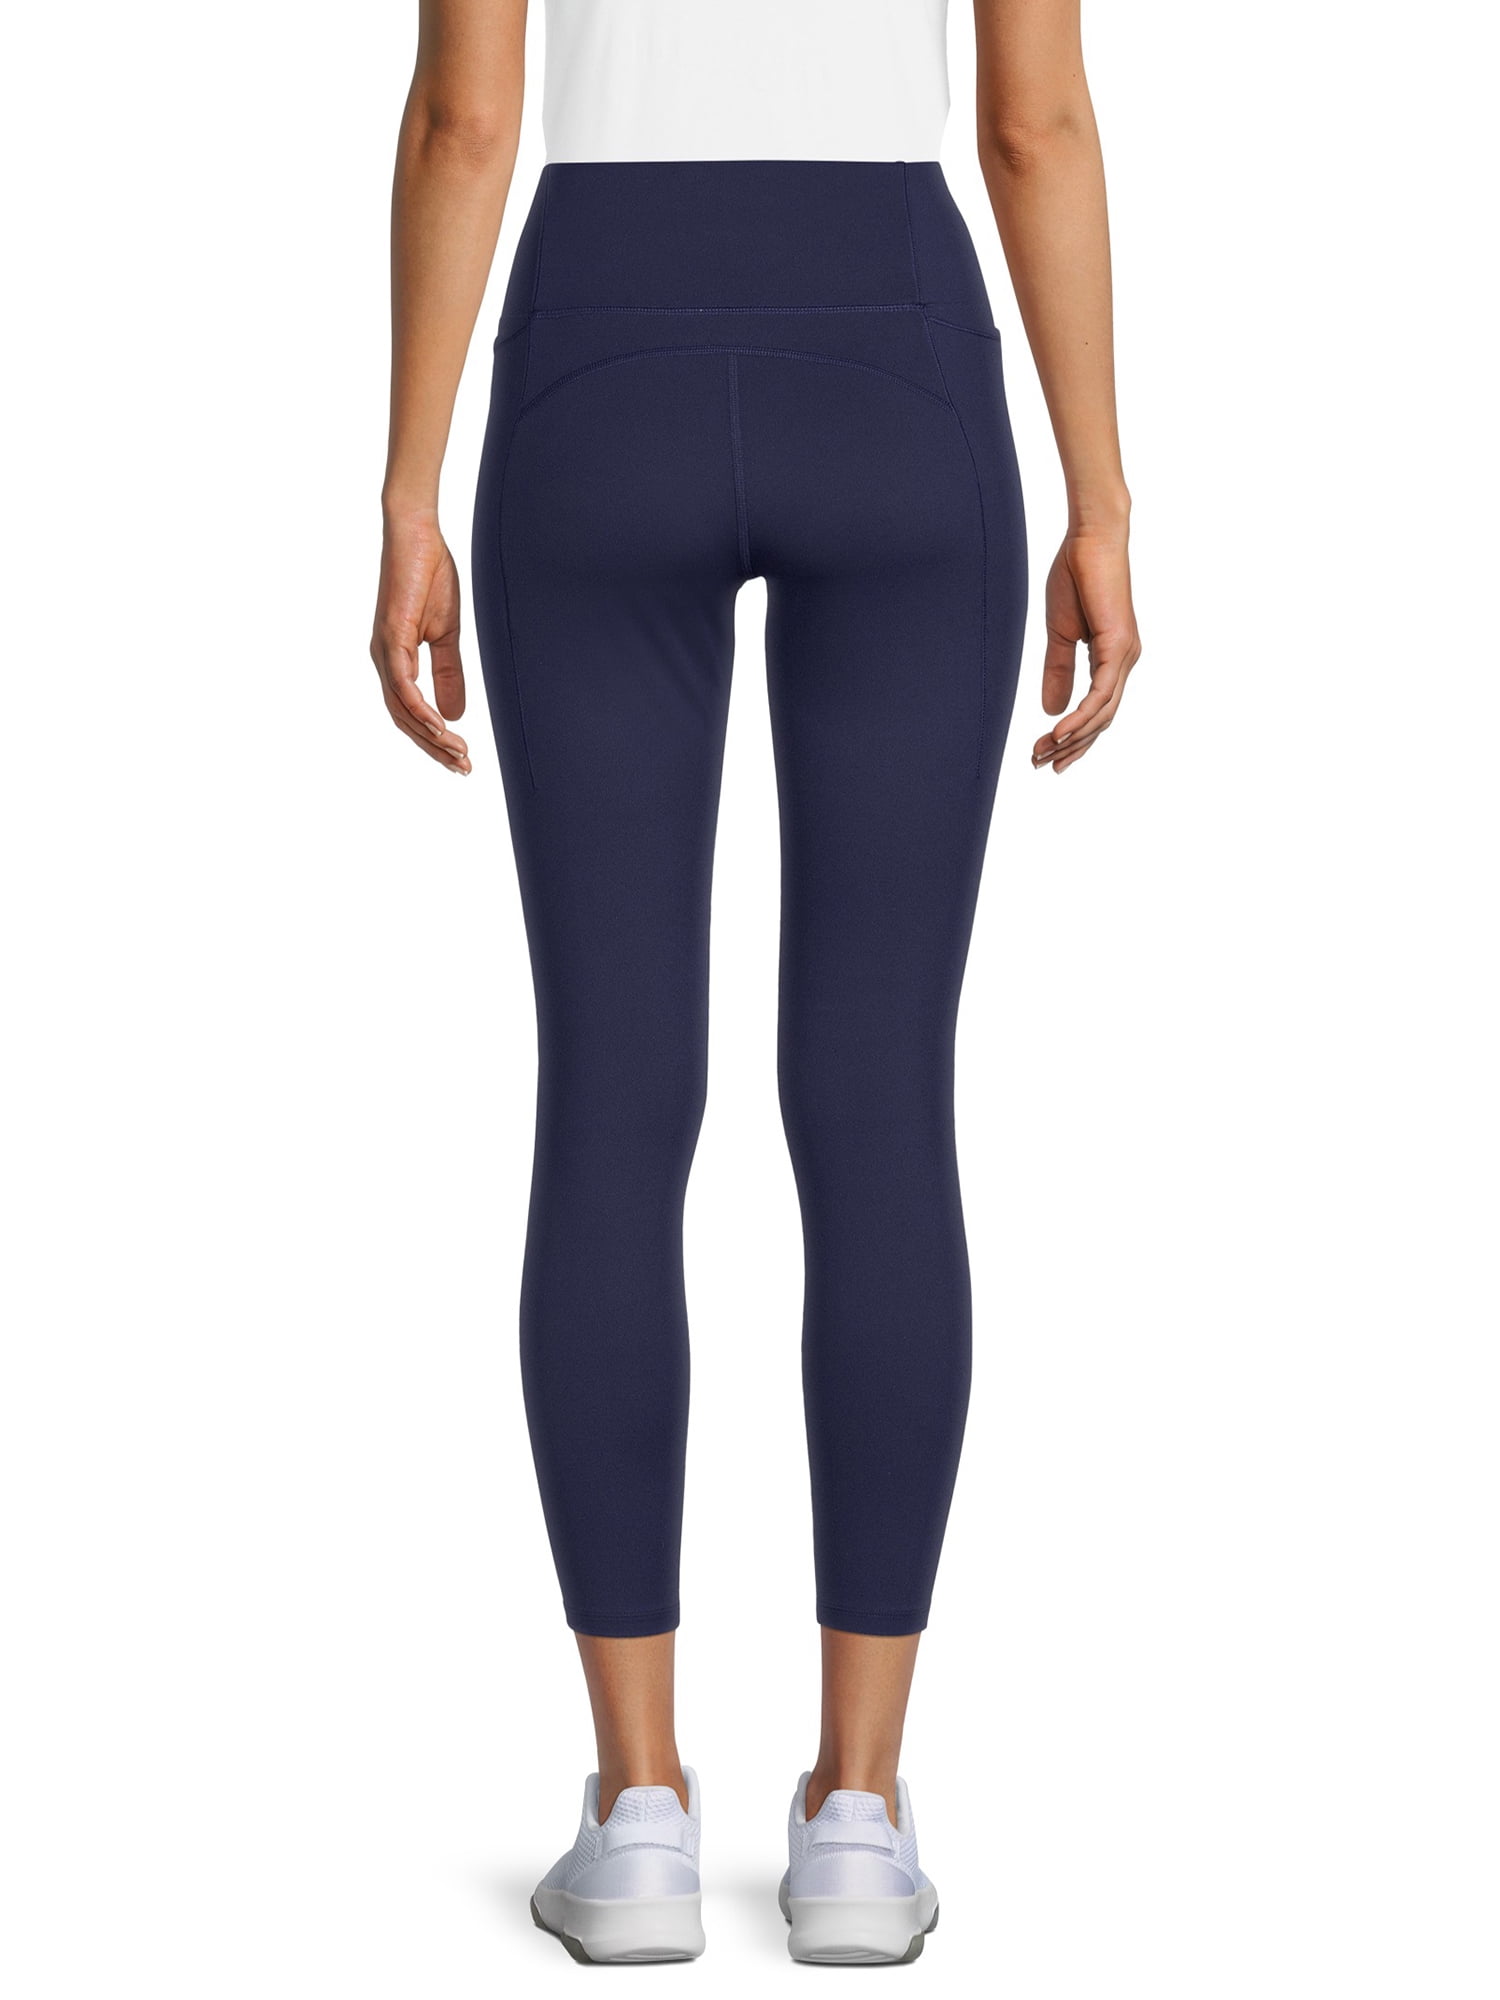 Avia Women's Pull On Commuter Pants, 27.5” Inseam, Sizes XS-XXXL 